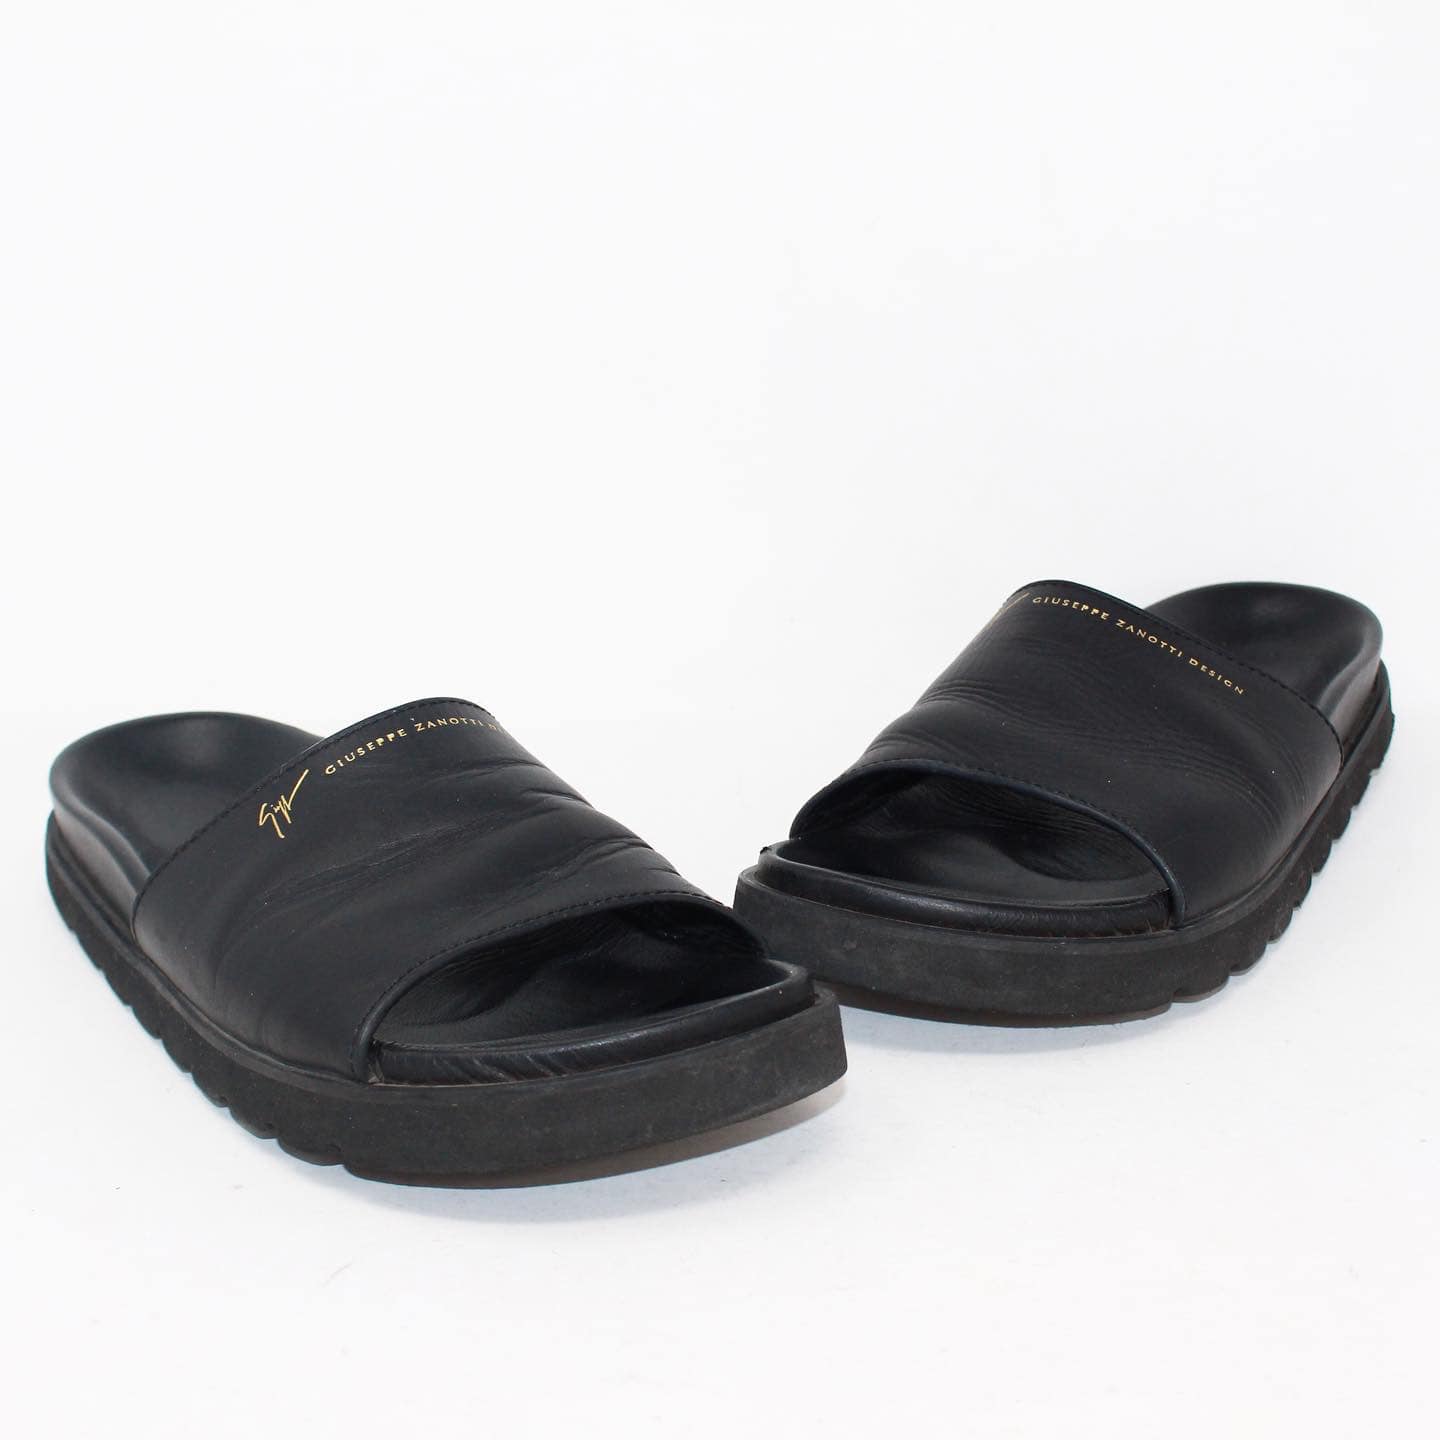 GIUSEPPE ZANOTTI 39161 Black Leather Sandals US 7 EU 37 a